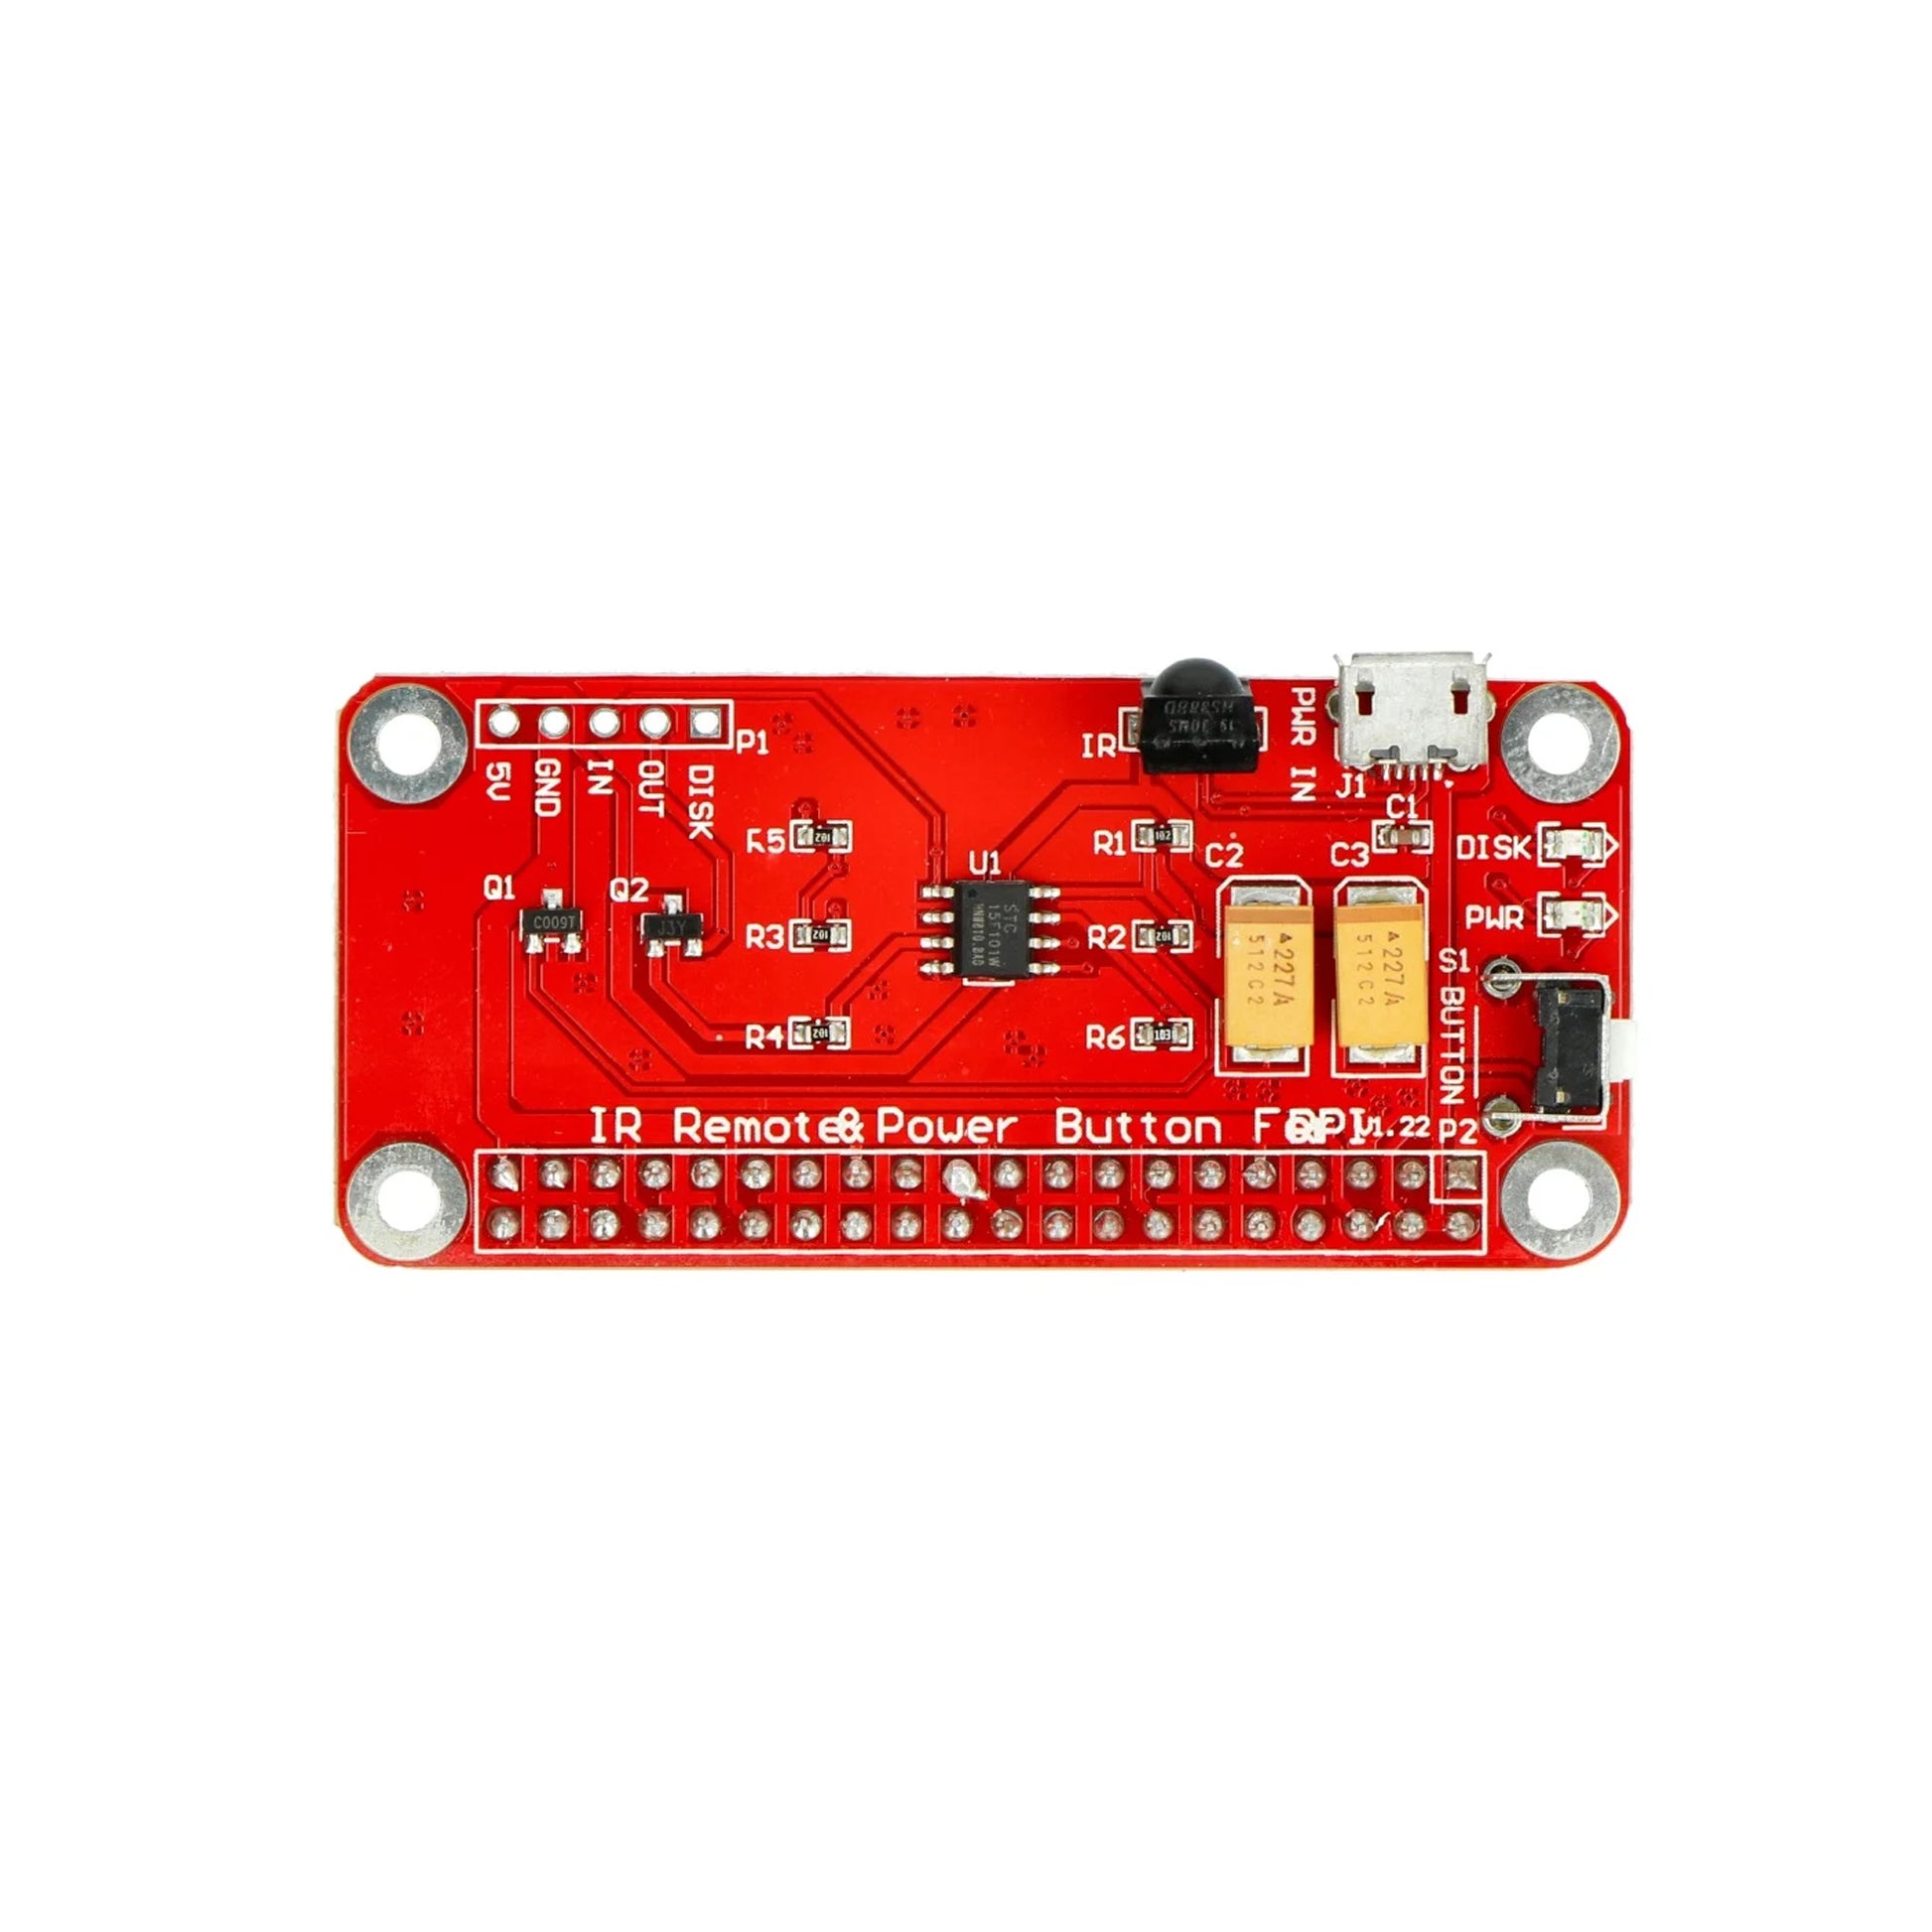 IR Remote Control Switch Power Button Module For Raspberry Pi Raspberry Pi 3 2 Model B Pi B+ A+ Zero, Remote Control Module - RS1016 - REES52